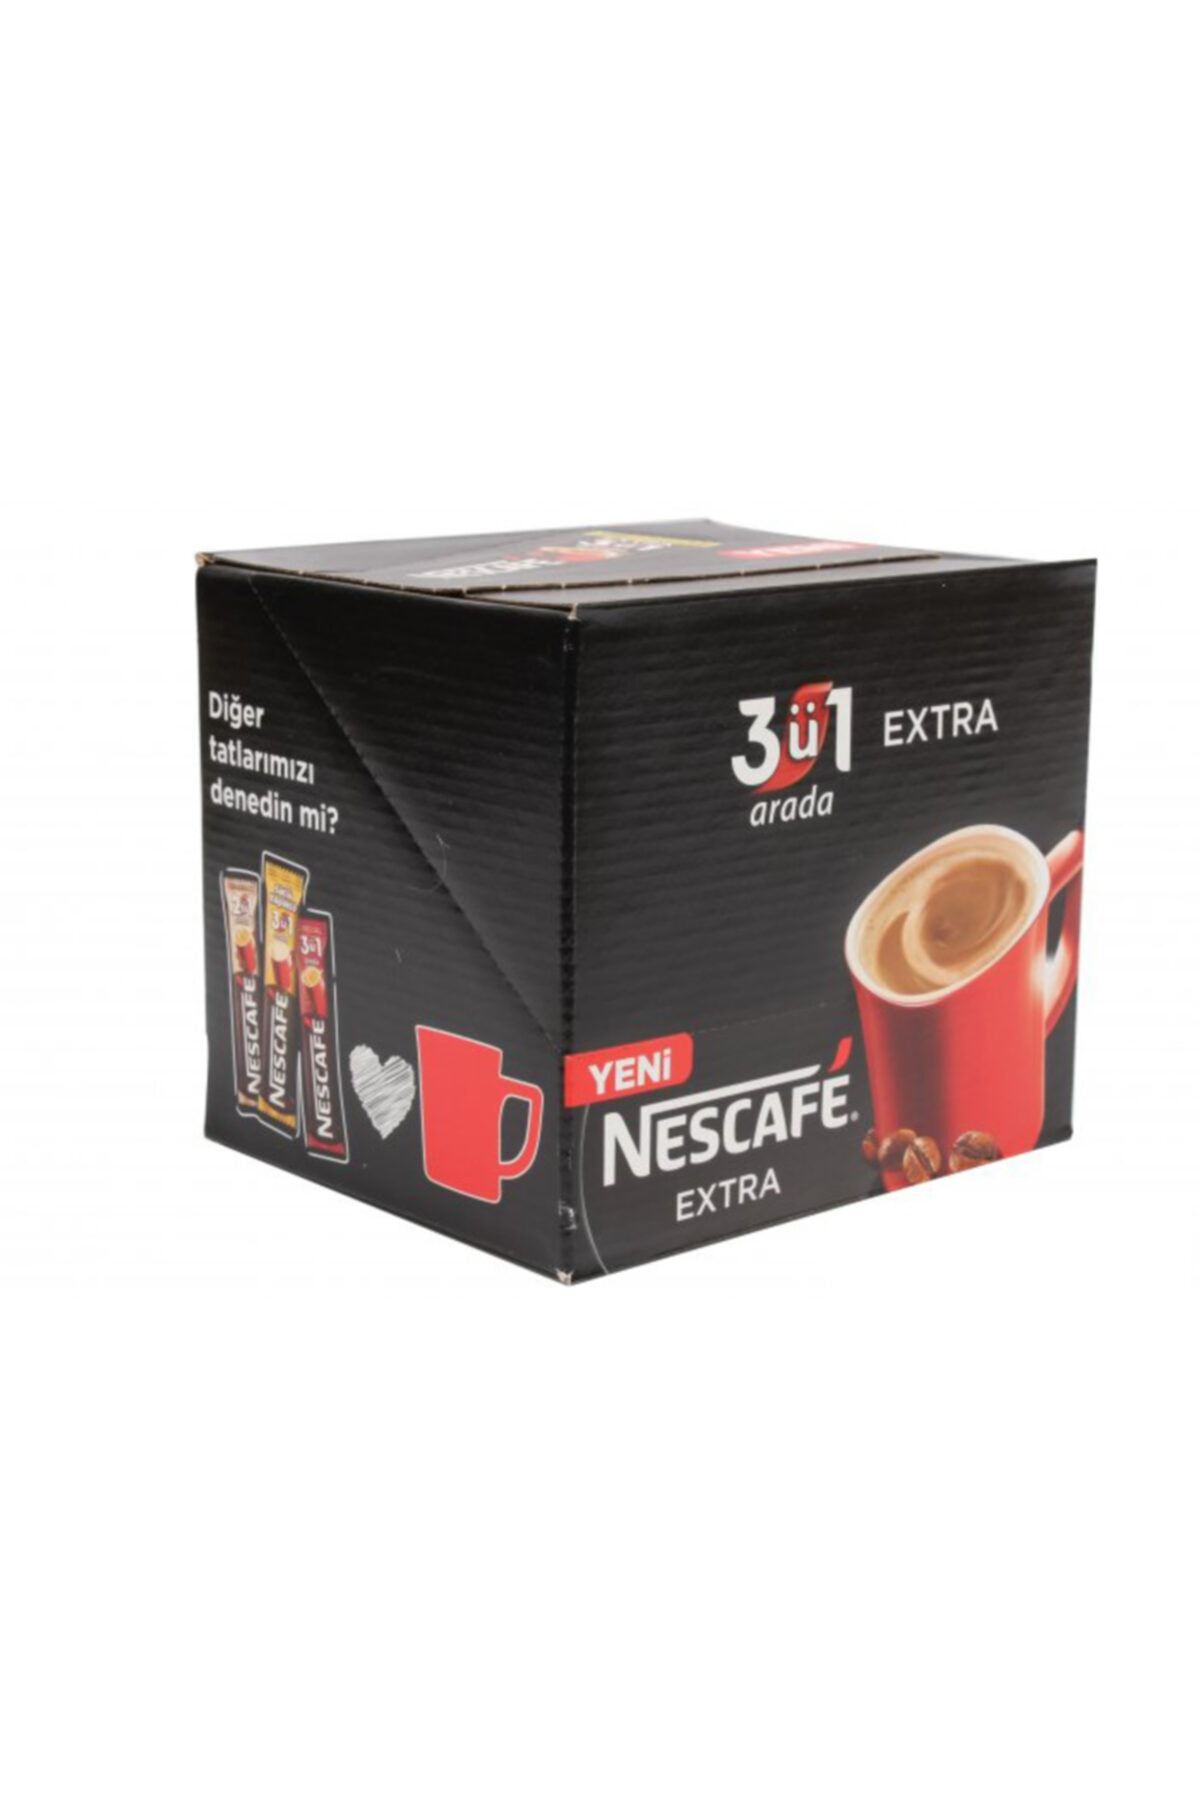 Nestle Nescafe 3ü 1 Arada Kahve Extra 48 Adet